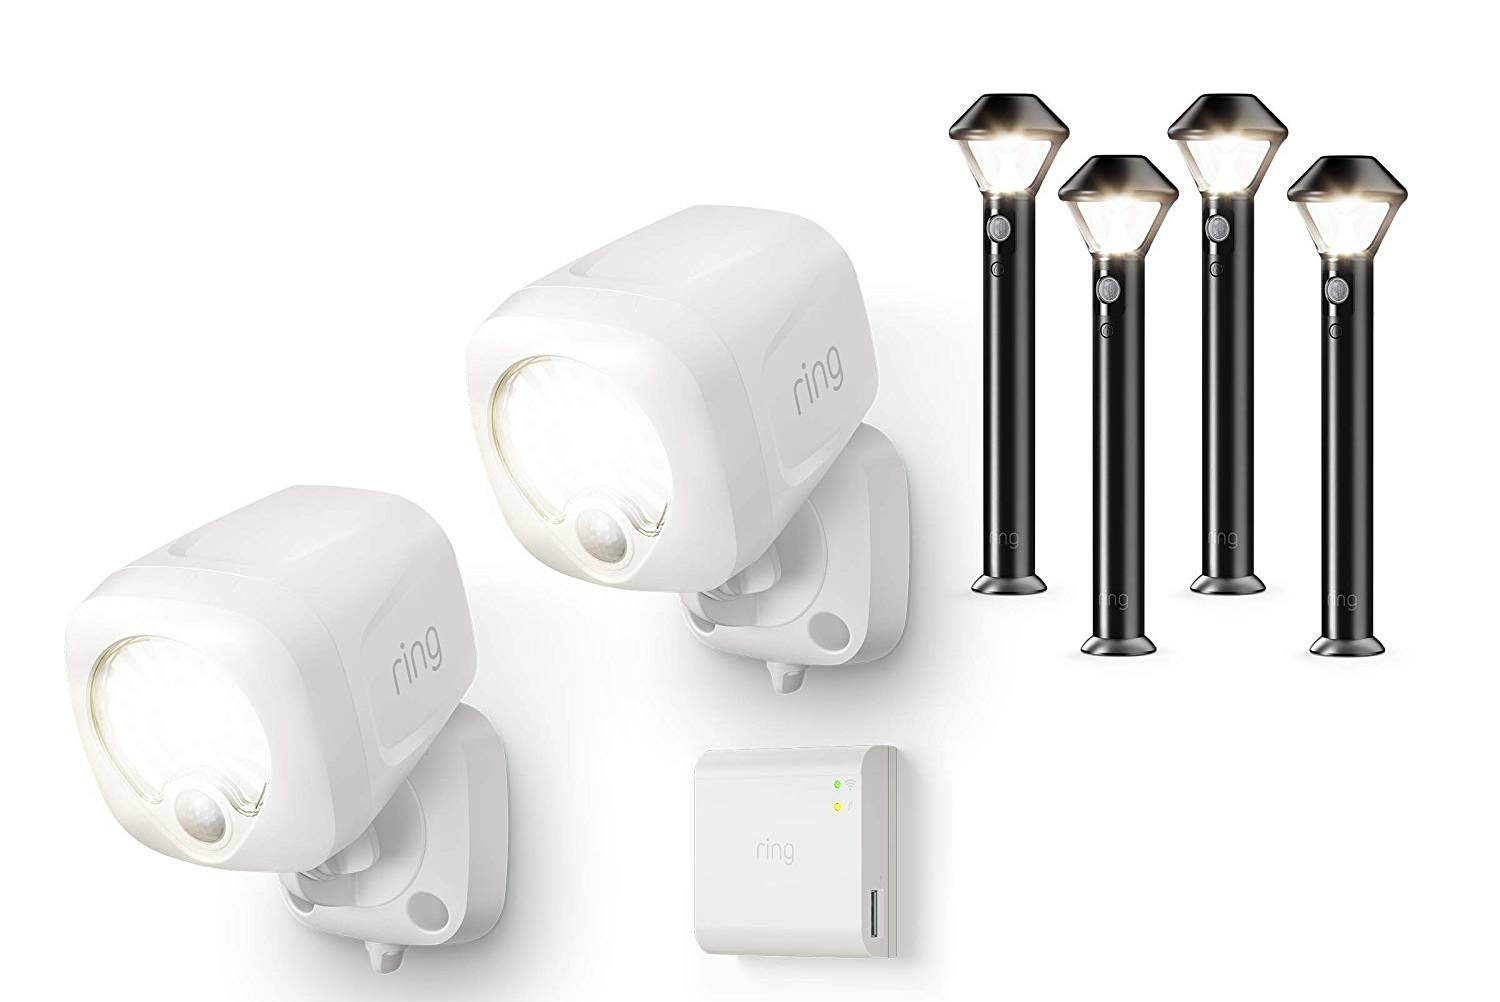 amazon ring smart lighting pre order deals  spotlight white starter kit 2 pack bundle with 4 pathlights 750x500